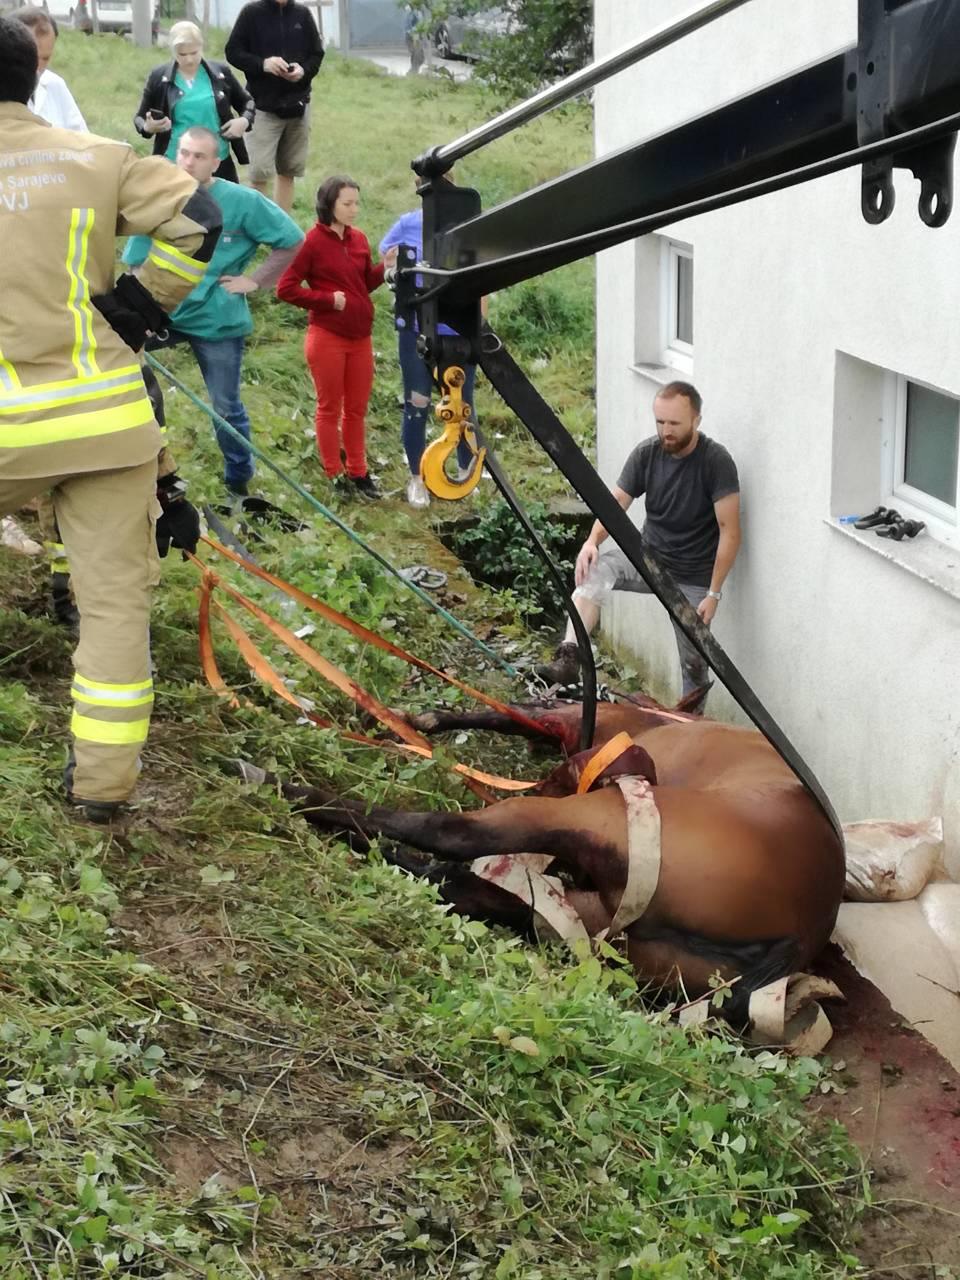 Konj spašen zahvaljujući brzoj reakciji KUCZ-a - Avaz